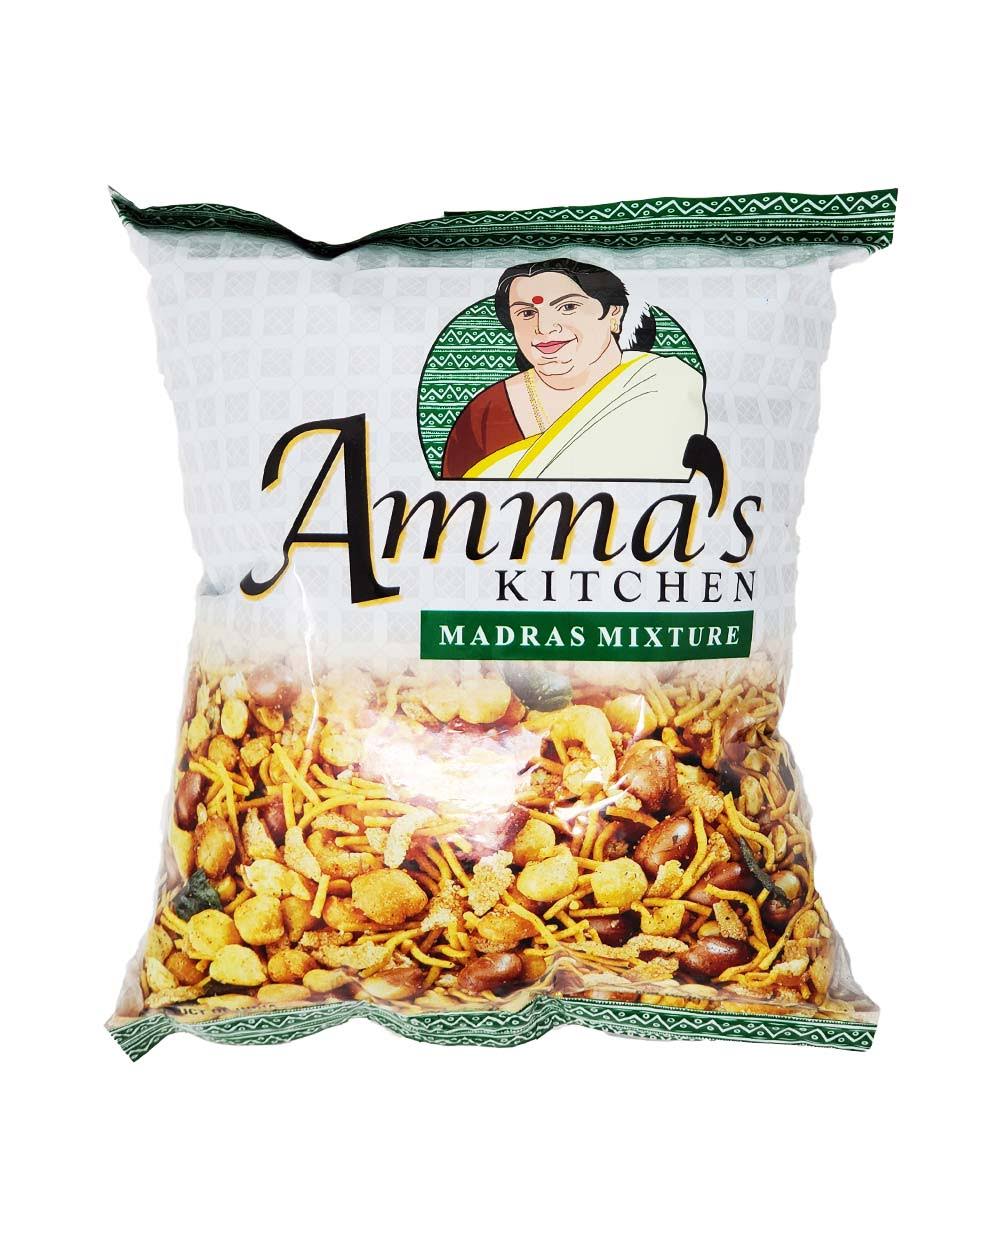 Ammas kitchen Madras mixture 400g